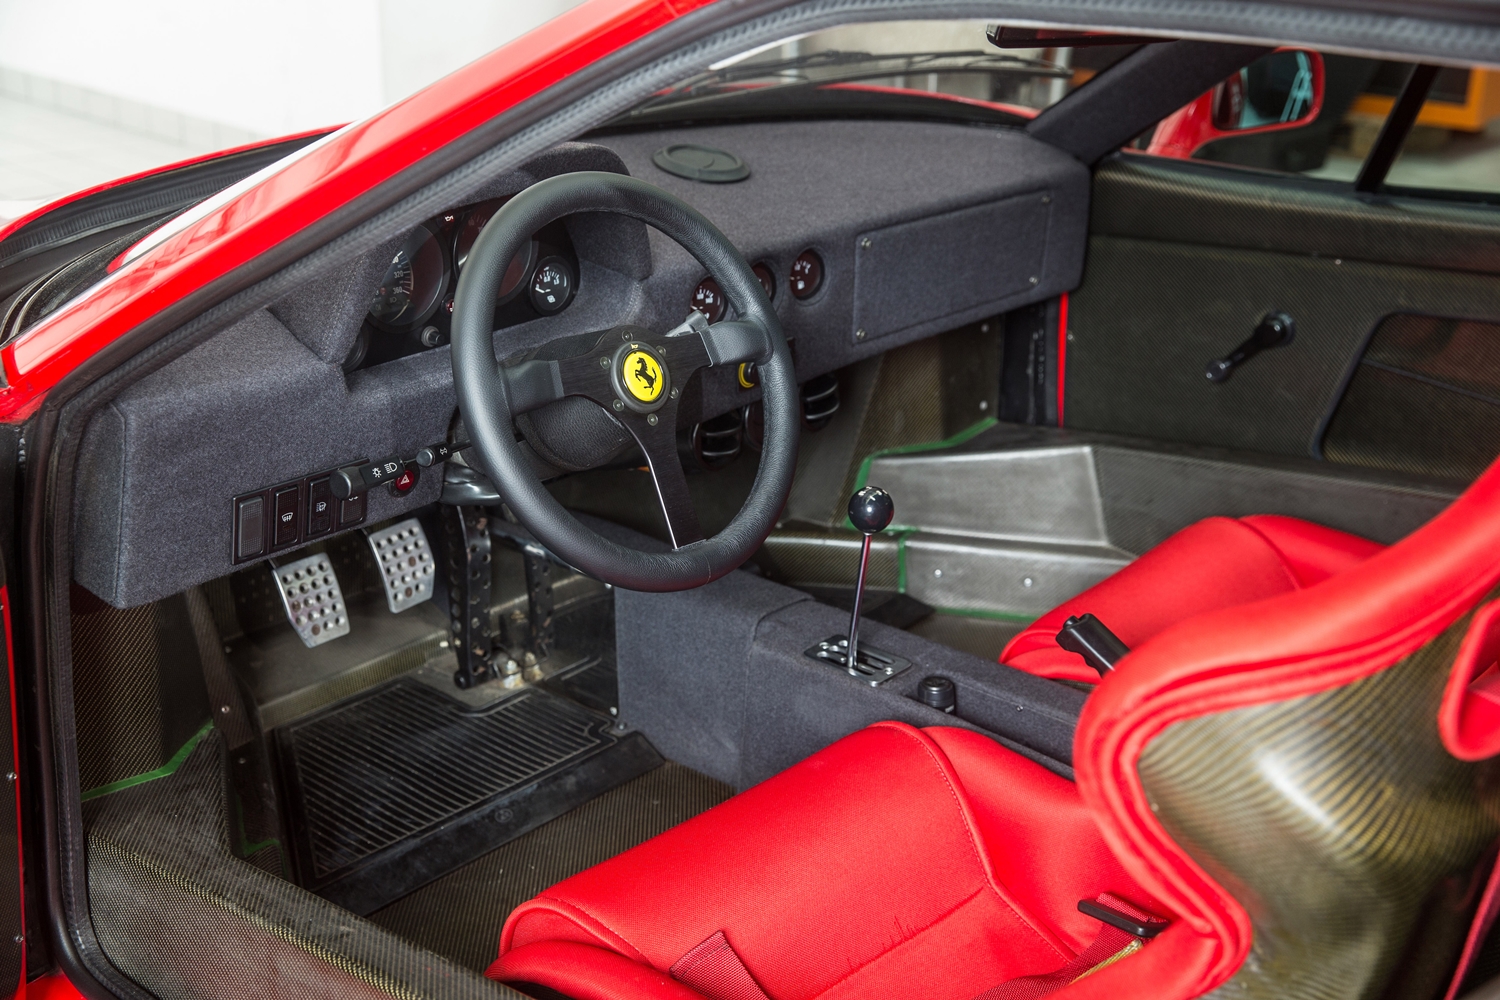 Itt az egykori F1-pilóta F40-es Ferrarija 10